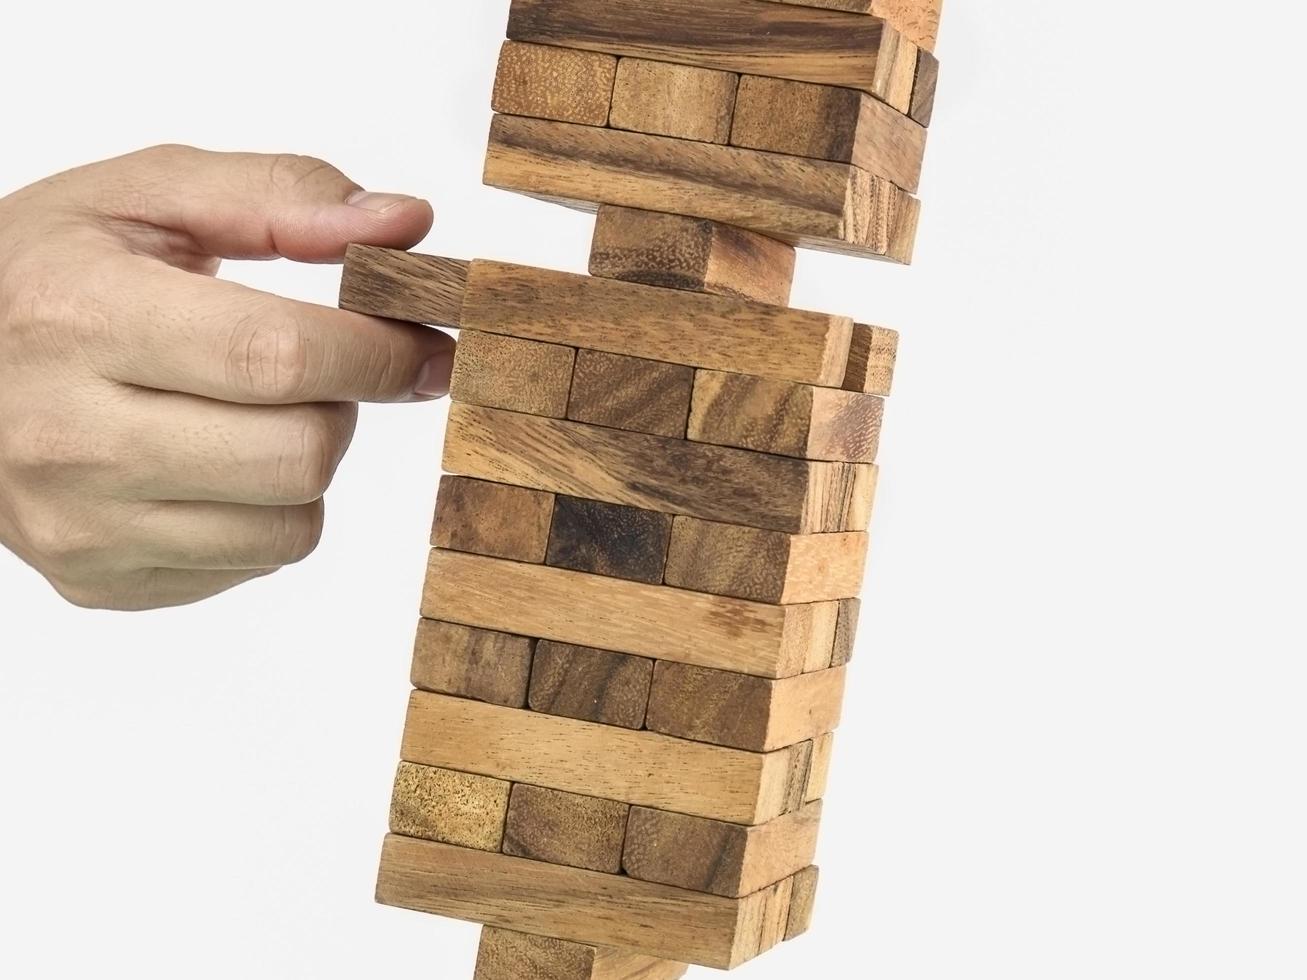 torre de bloques de madera inclinada juego jenga con mano, concepto de riesgo foto